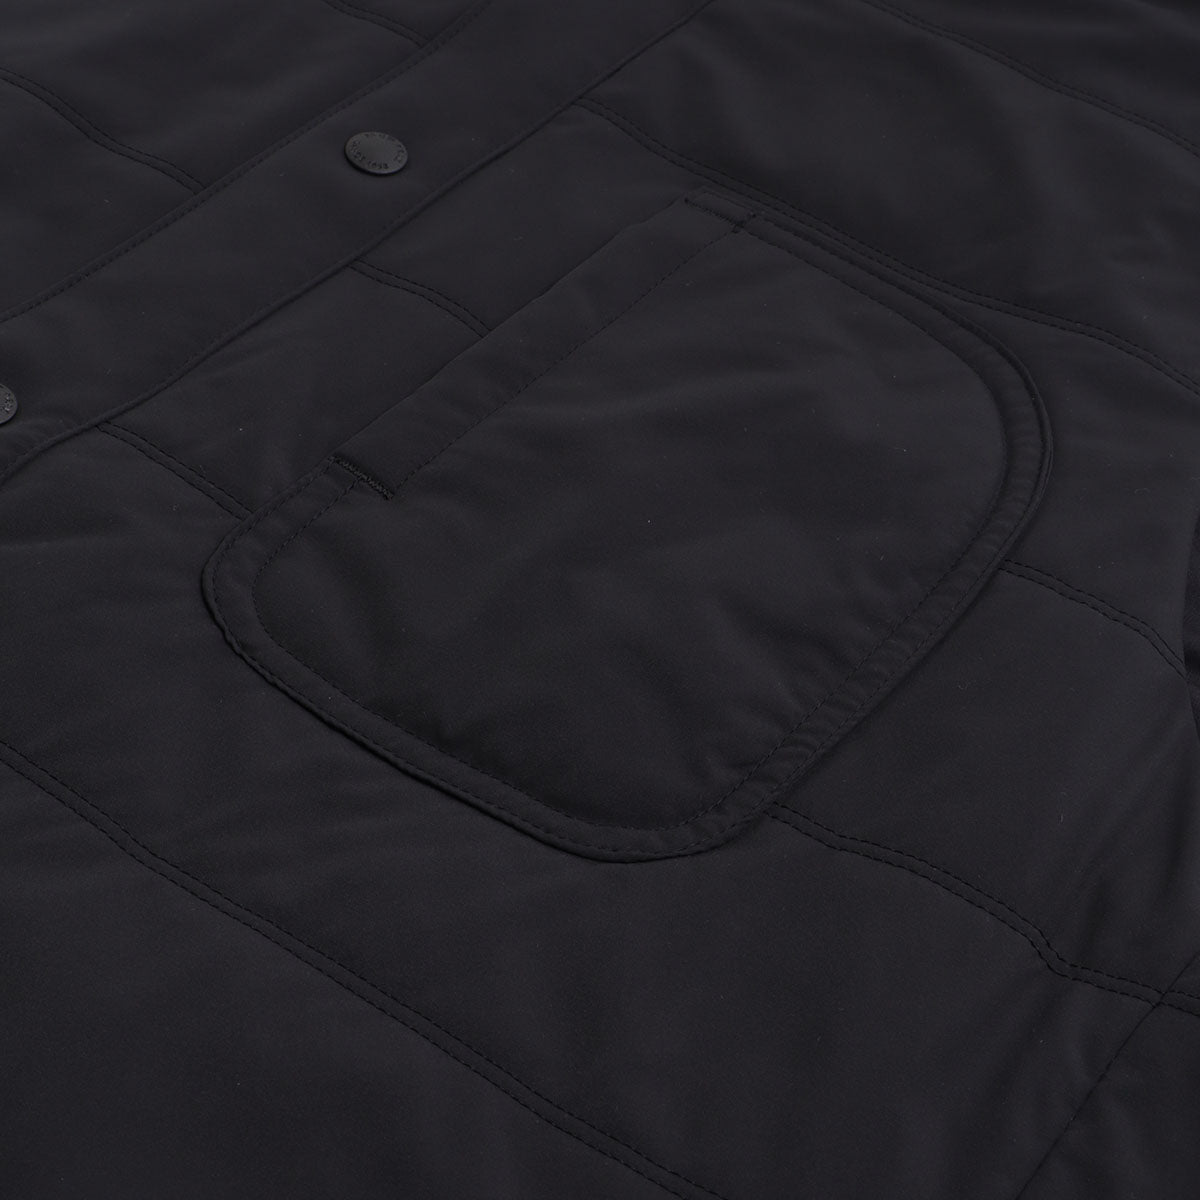 Snow Peak Flexible Insulated Vest, Black, Detail Shot 4